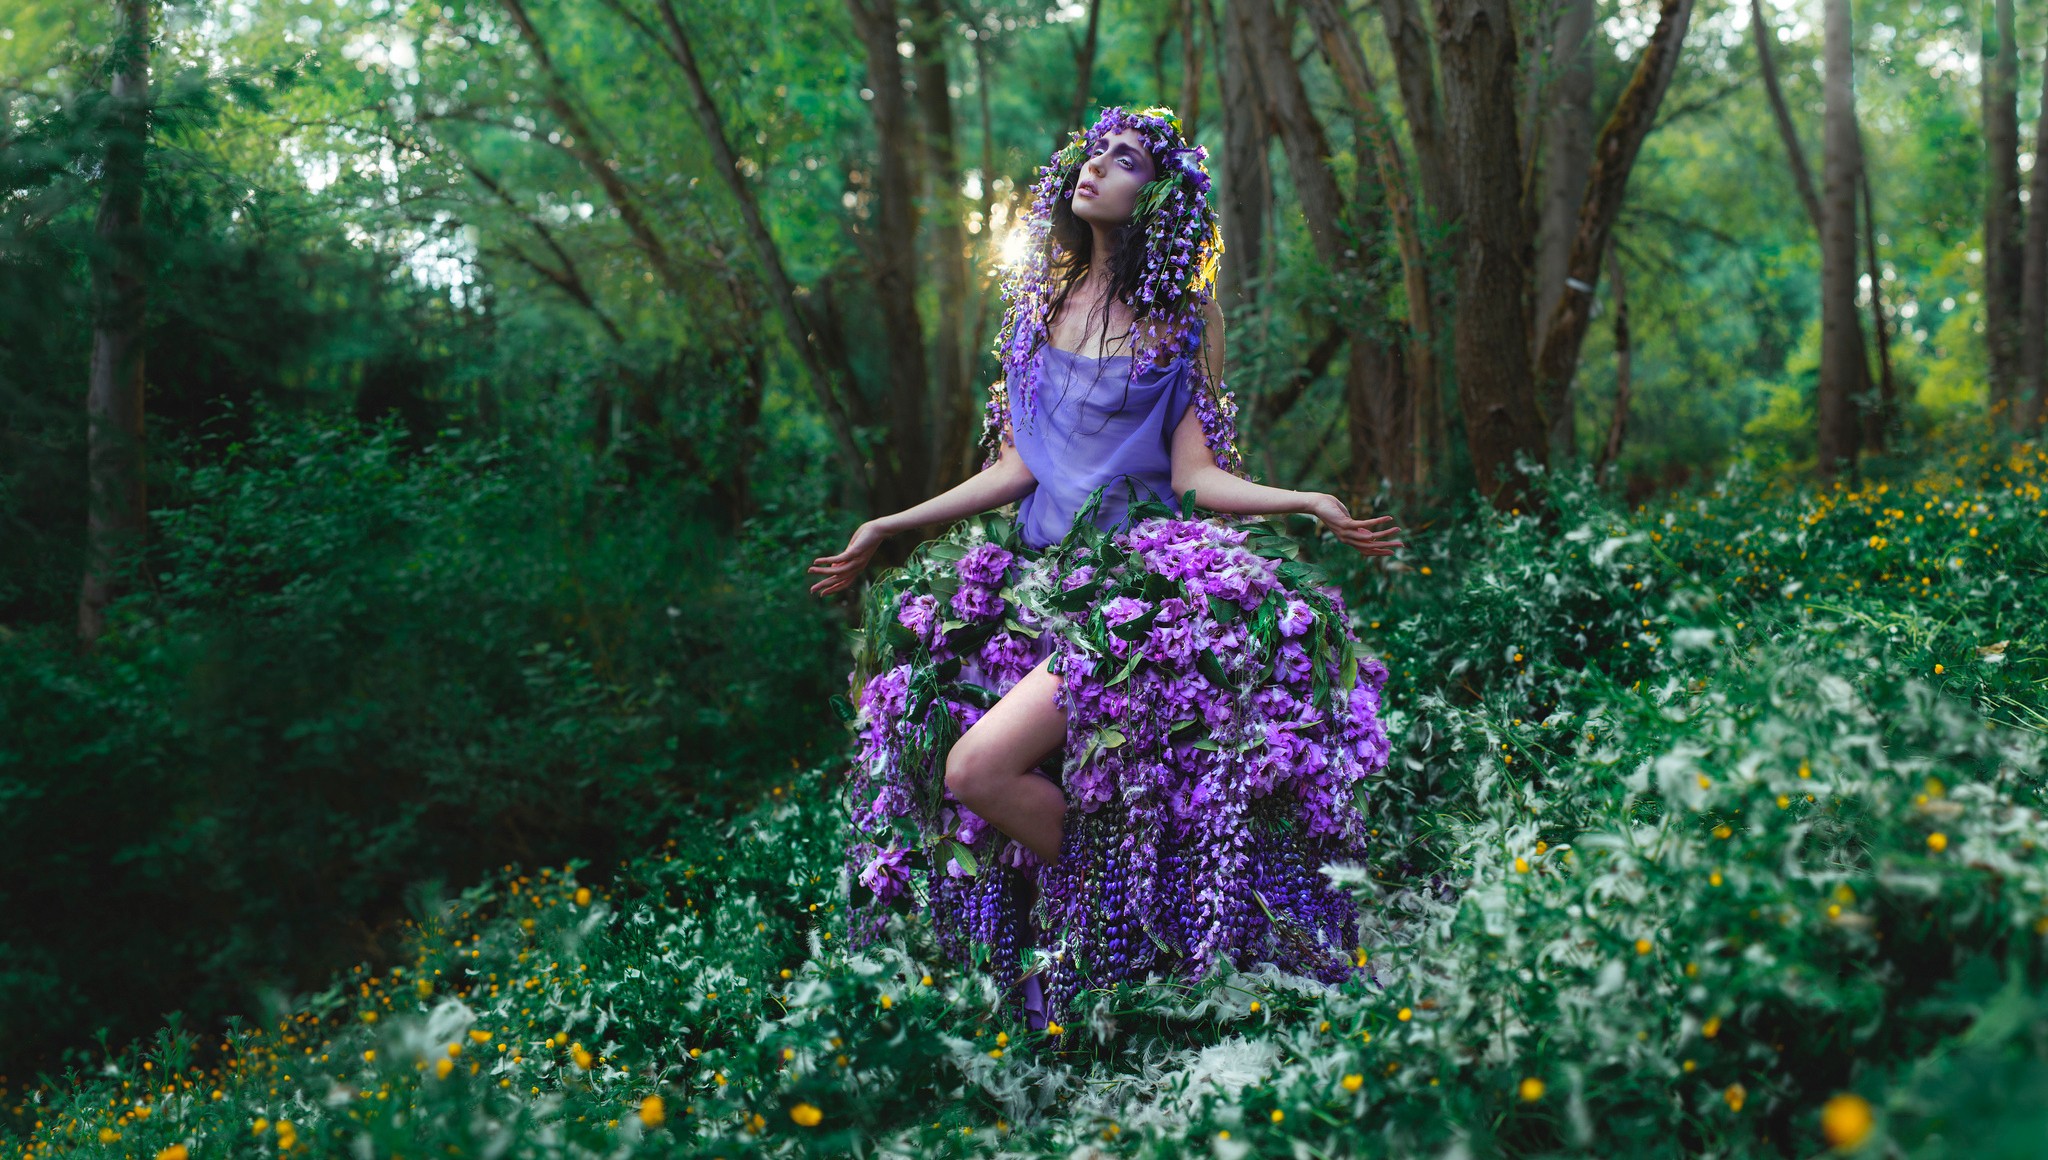 Women Model Women Outdoors Purple Clothing Flower In Hair Flower Dress Symbolism Spring Nymph 2048x1160